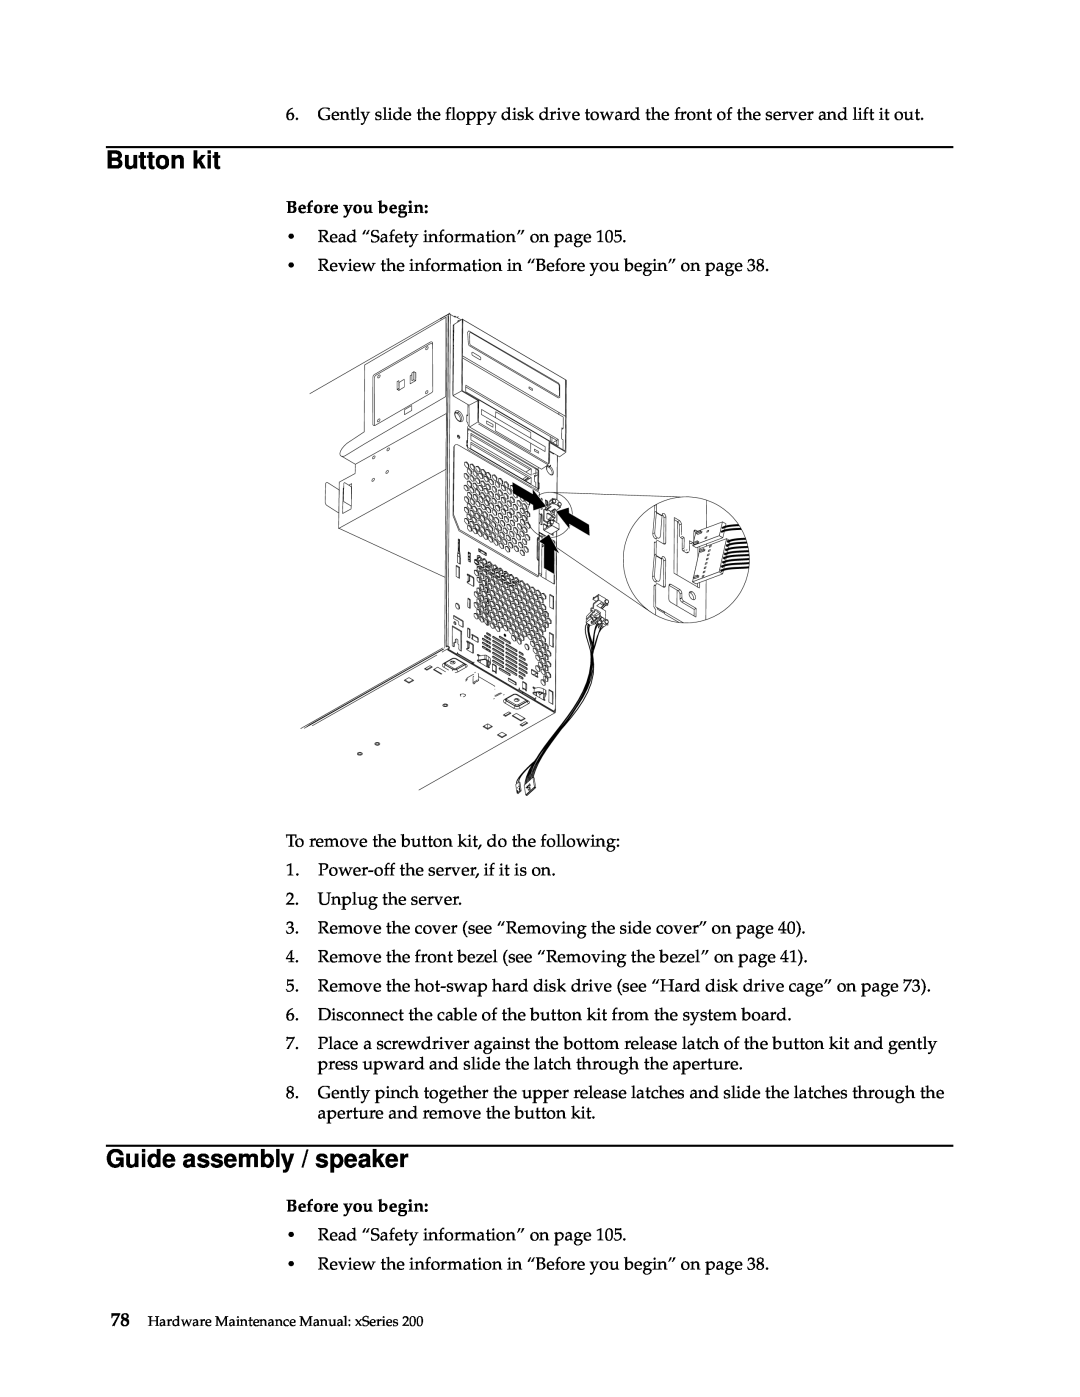 IBM x Series 200 manual Button kit, Guide assembly / speaker, Hardware Maintenance Manual xSeries 